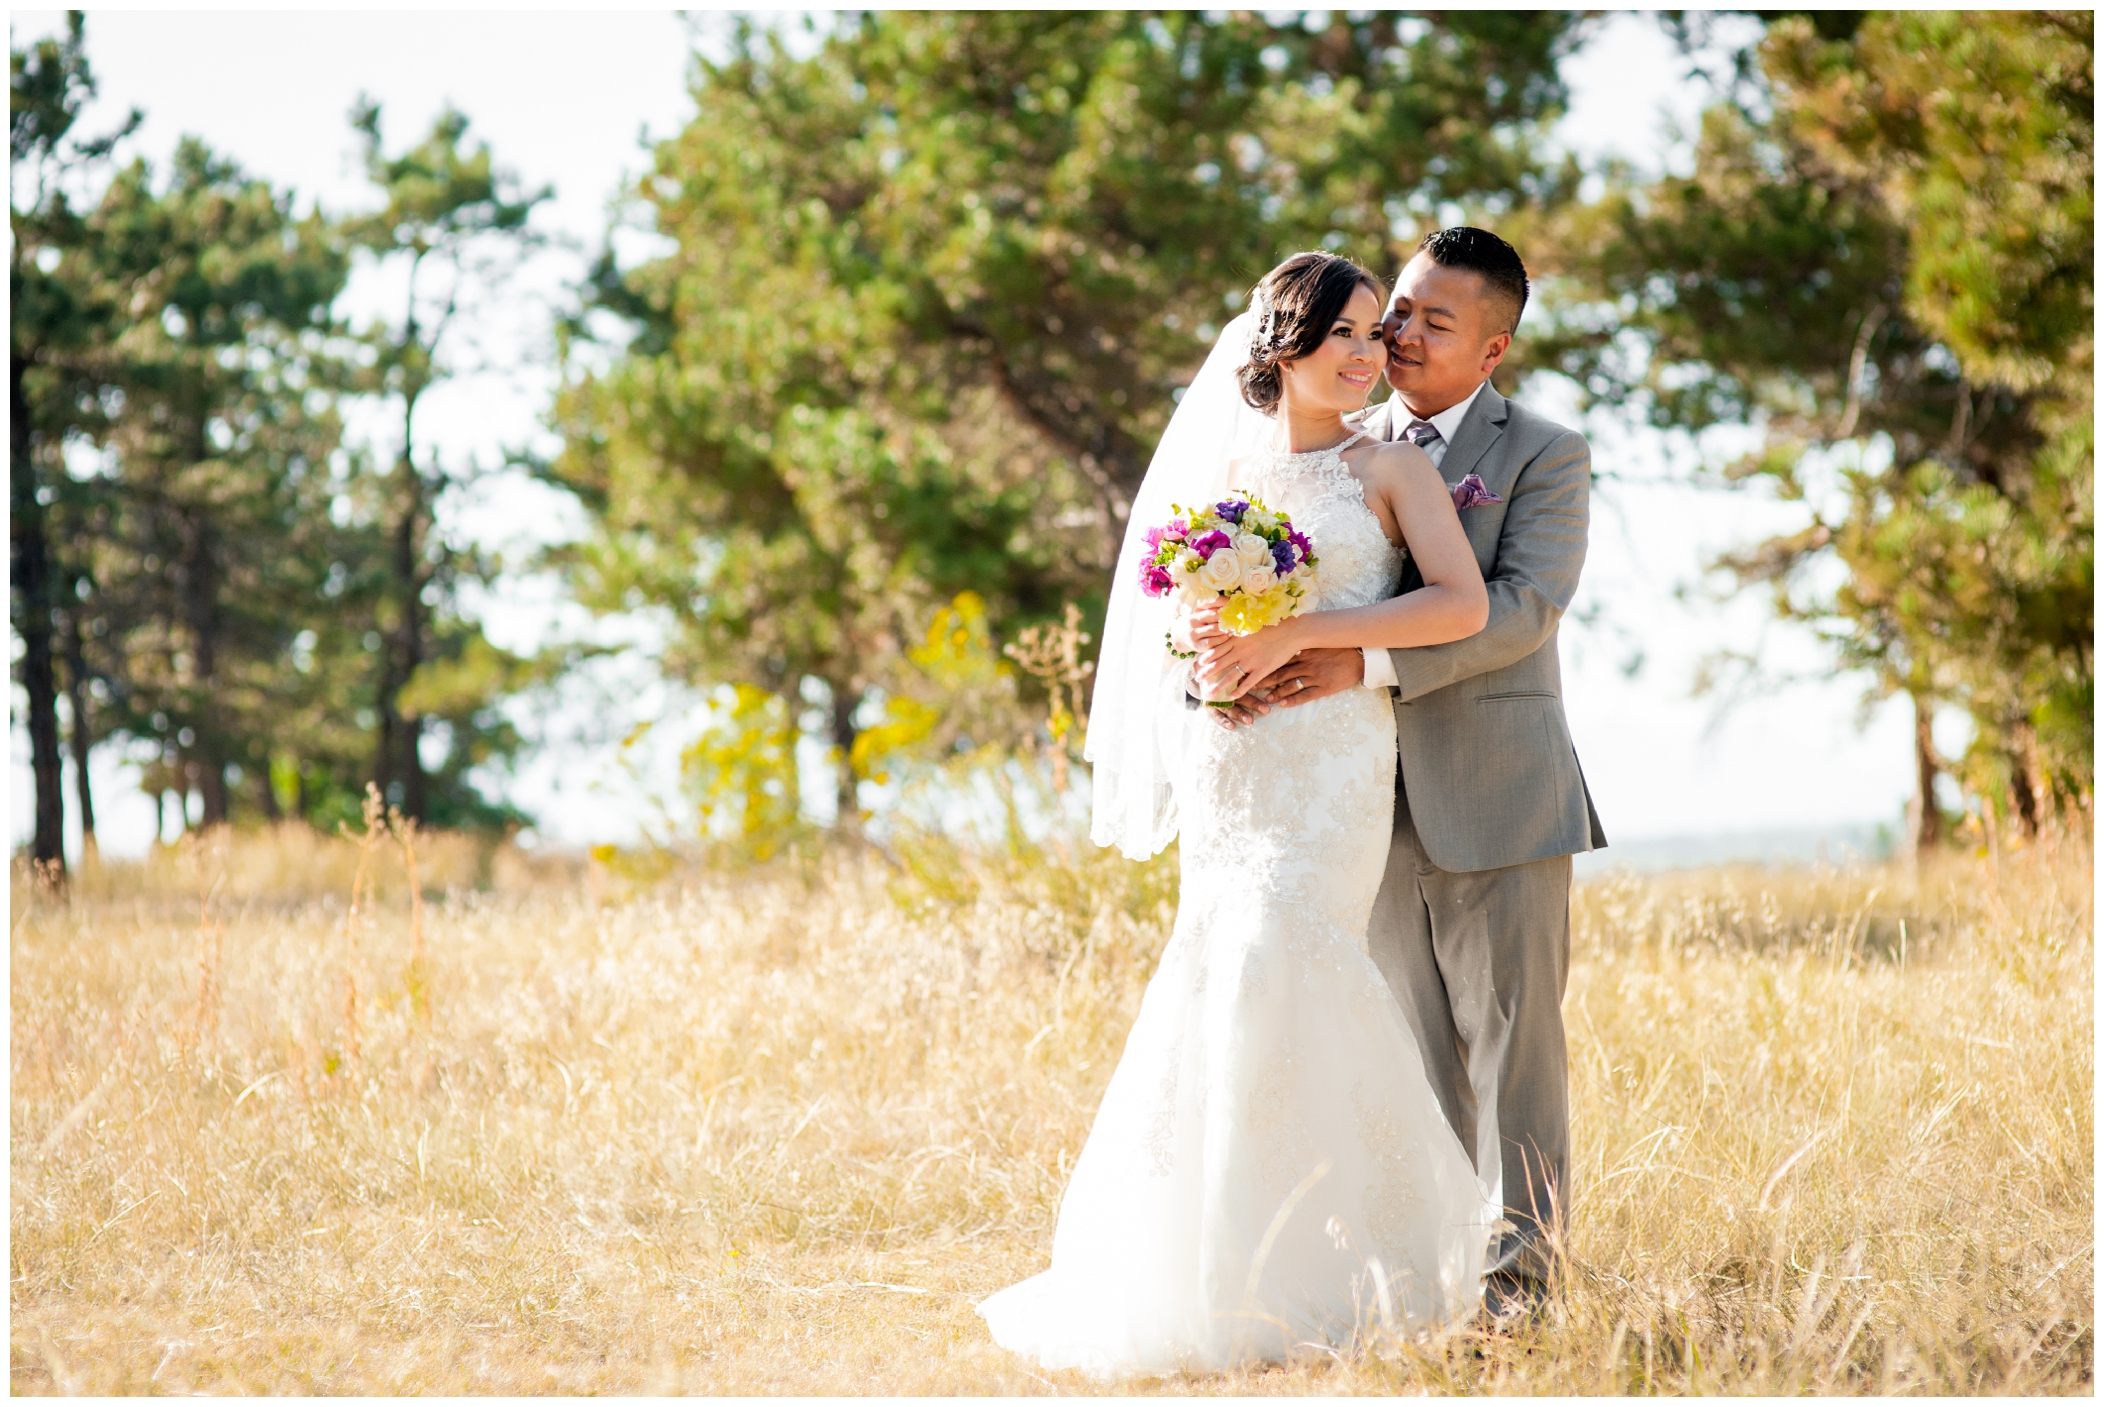 Denver wedding photos at Inspiration Point Park